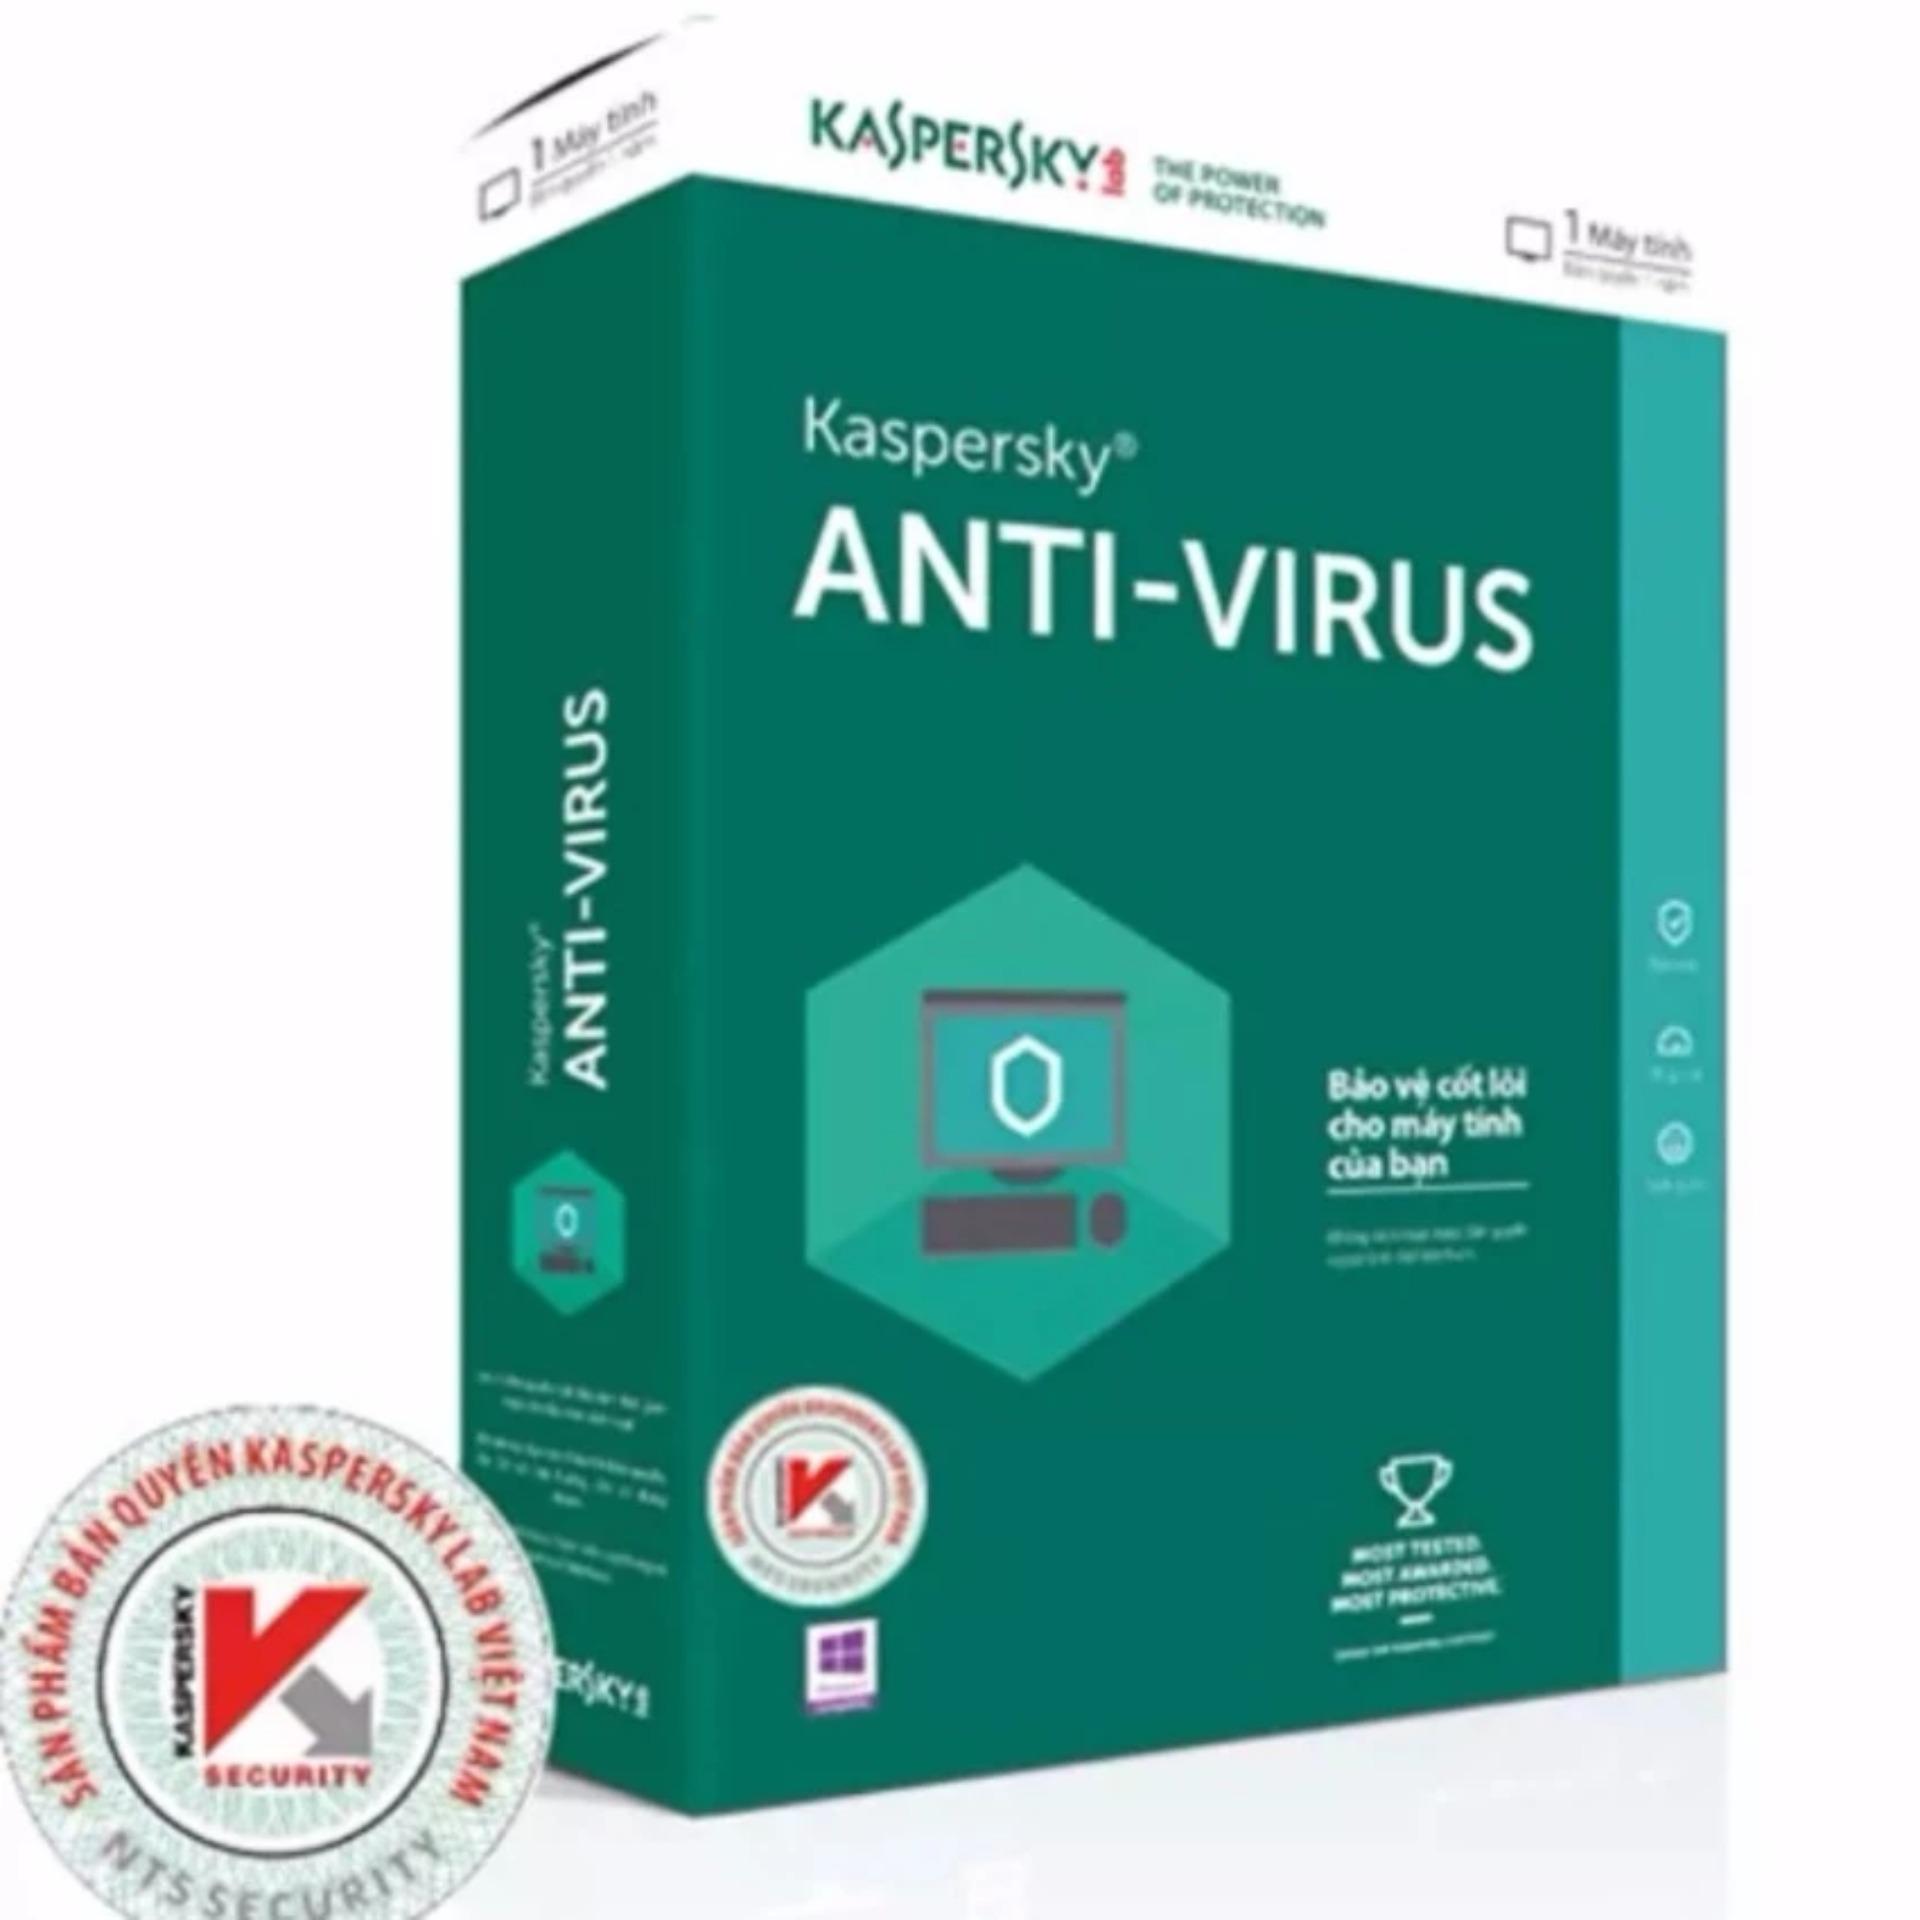 Kaspersky Anti-virus 2017